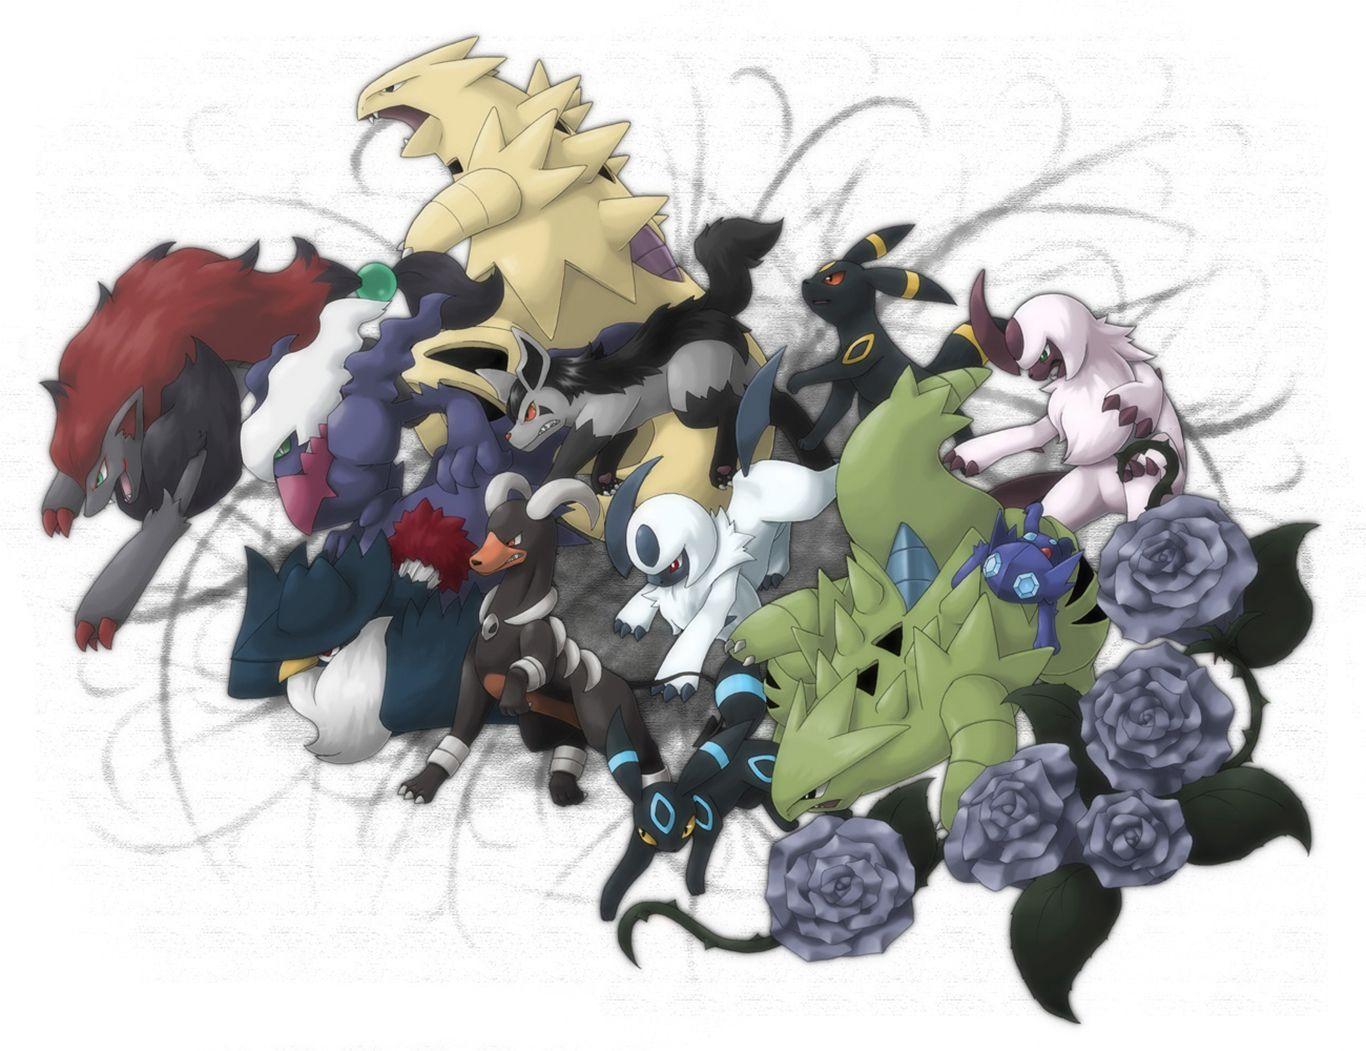 Honchkrow (Pokémon) HD Wallpaper and Background Image